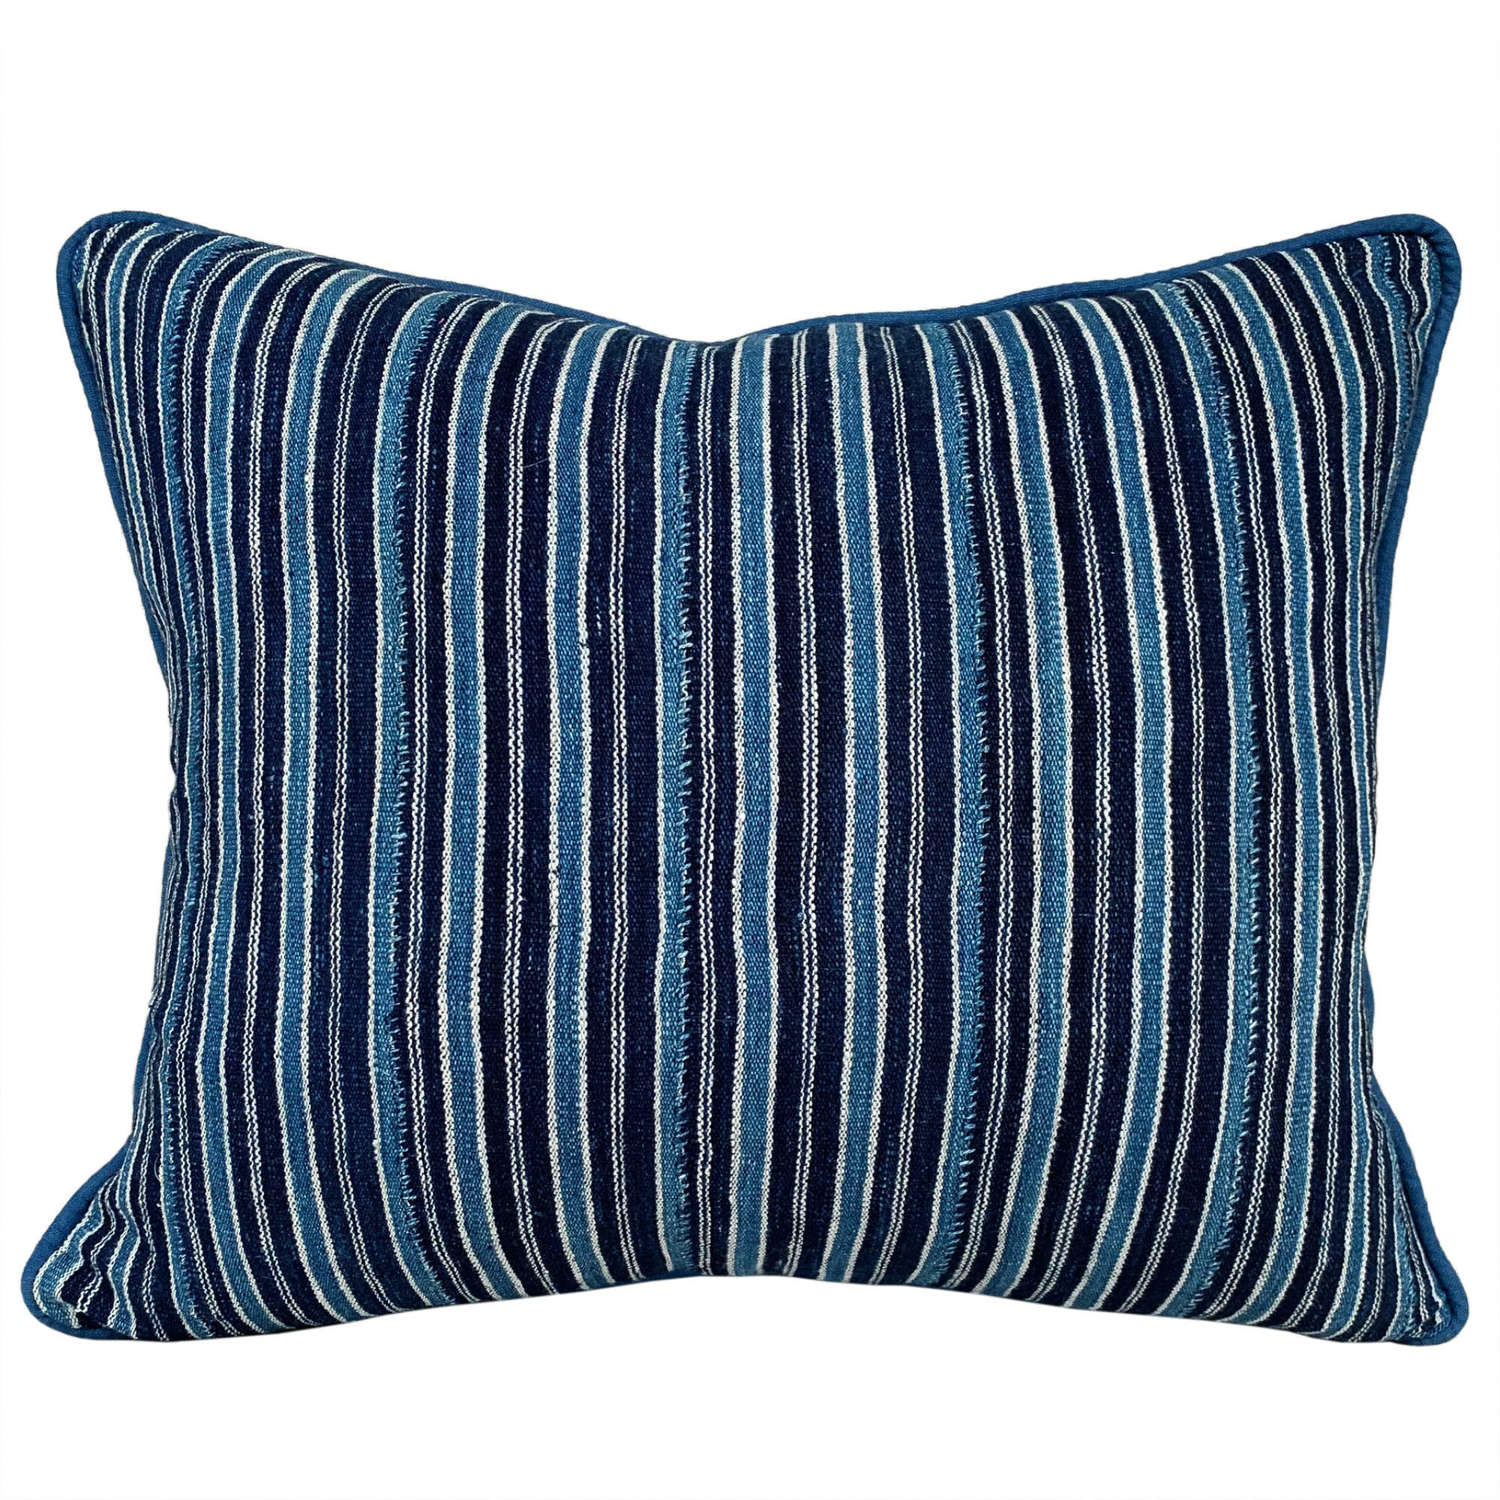 Benin indigo striped cushions